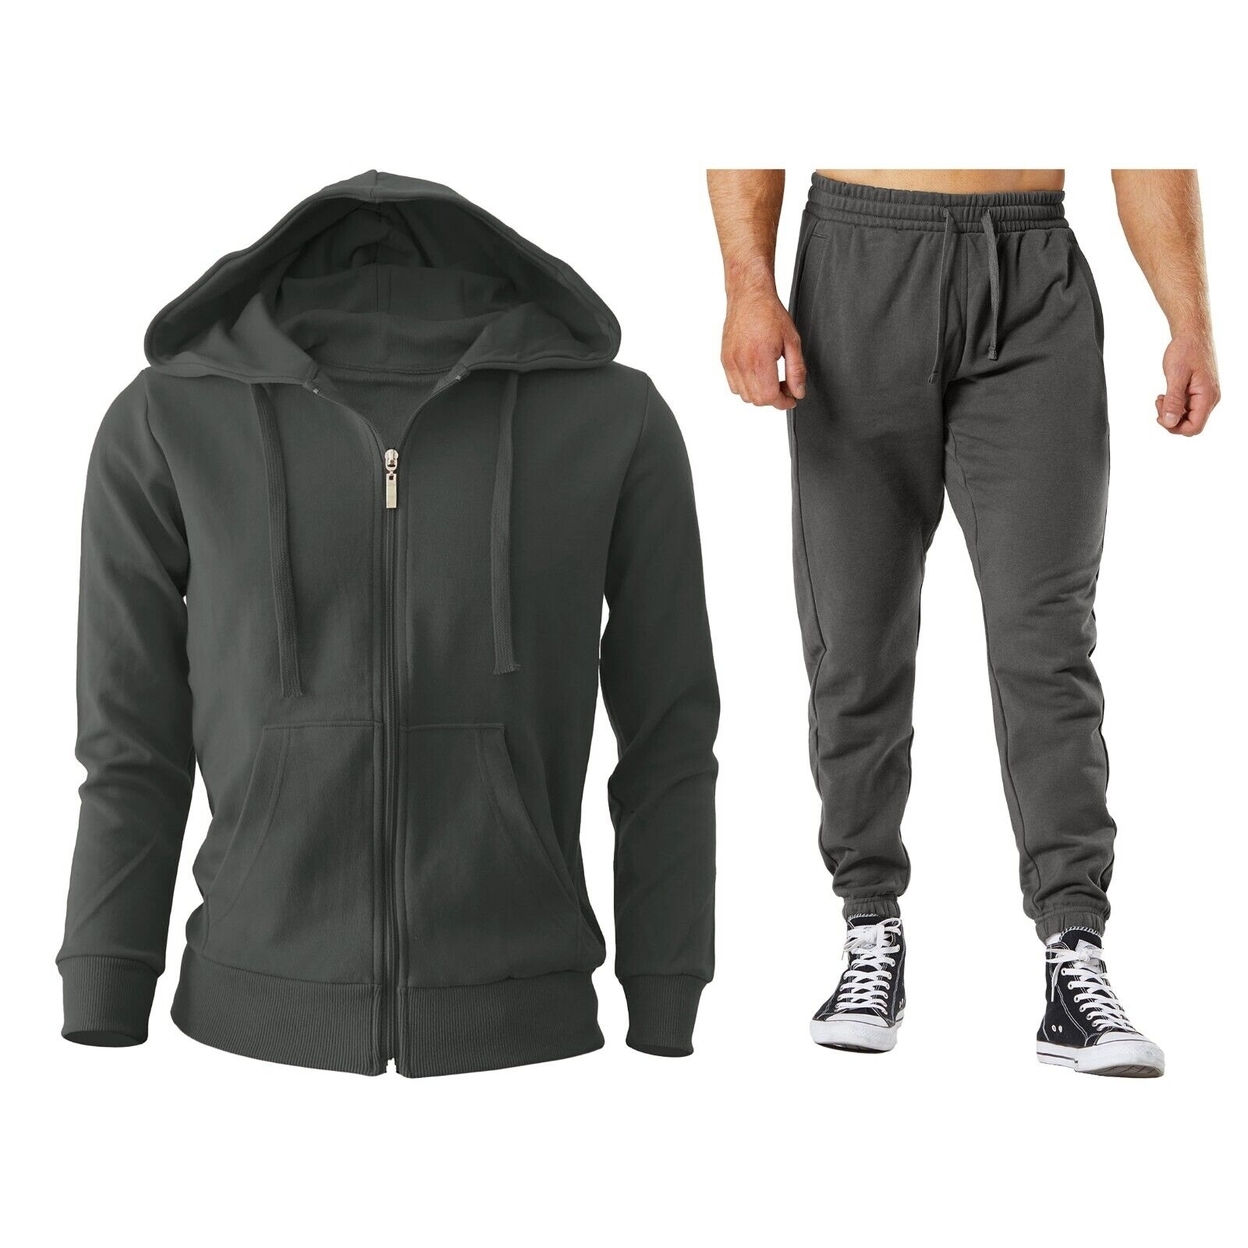 4-Piece: Men's Winter Warm Cozy Athletic Multi-Pockets BIG & TALL Sweatsuit Set - Charcoal, Small